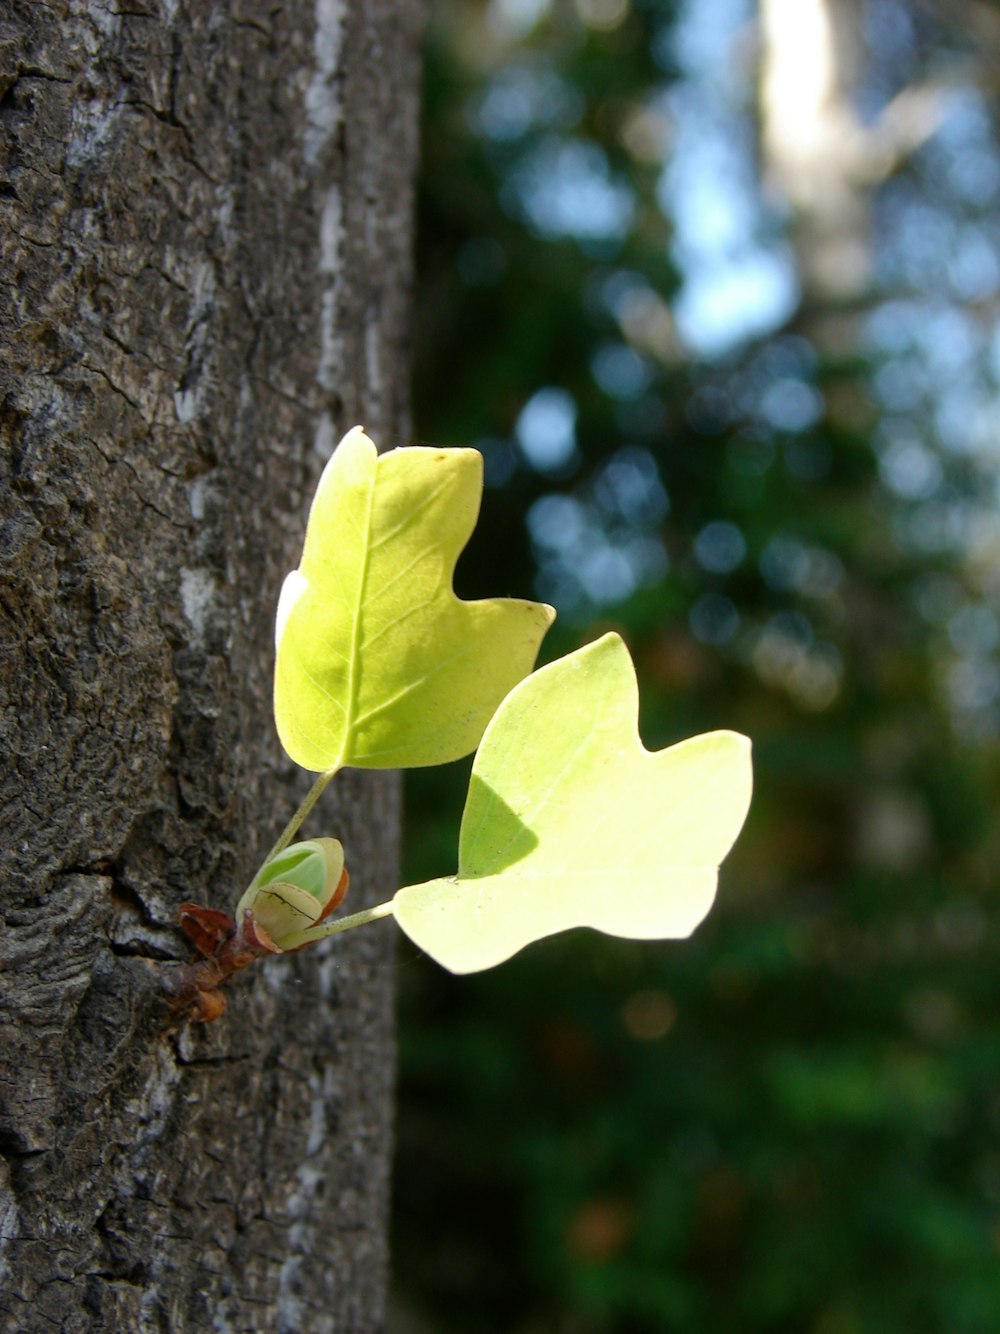 a single leaf on the side of a tree